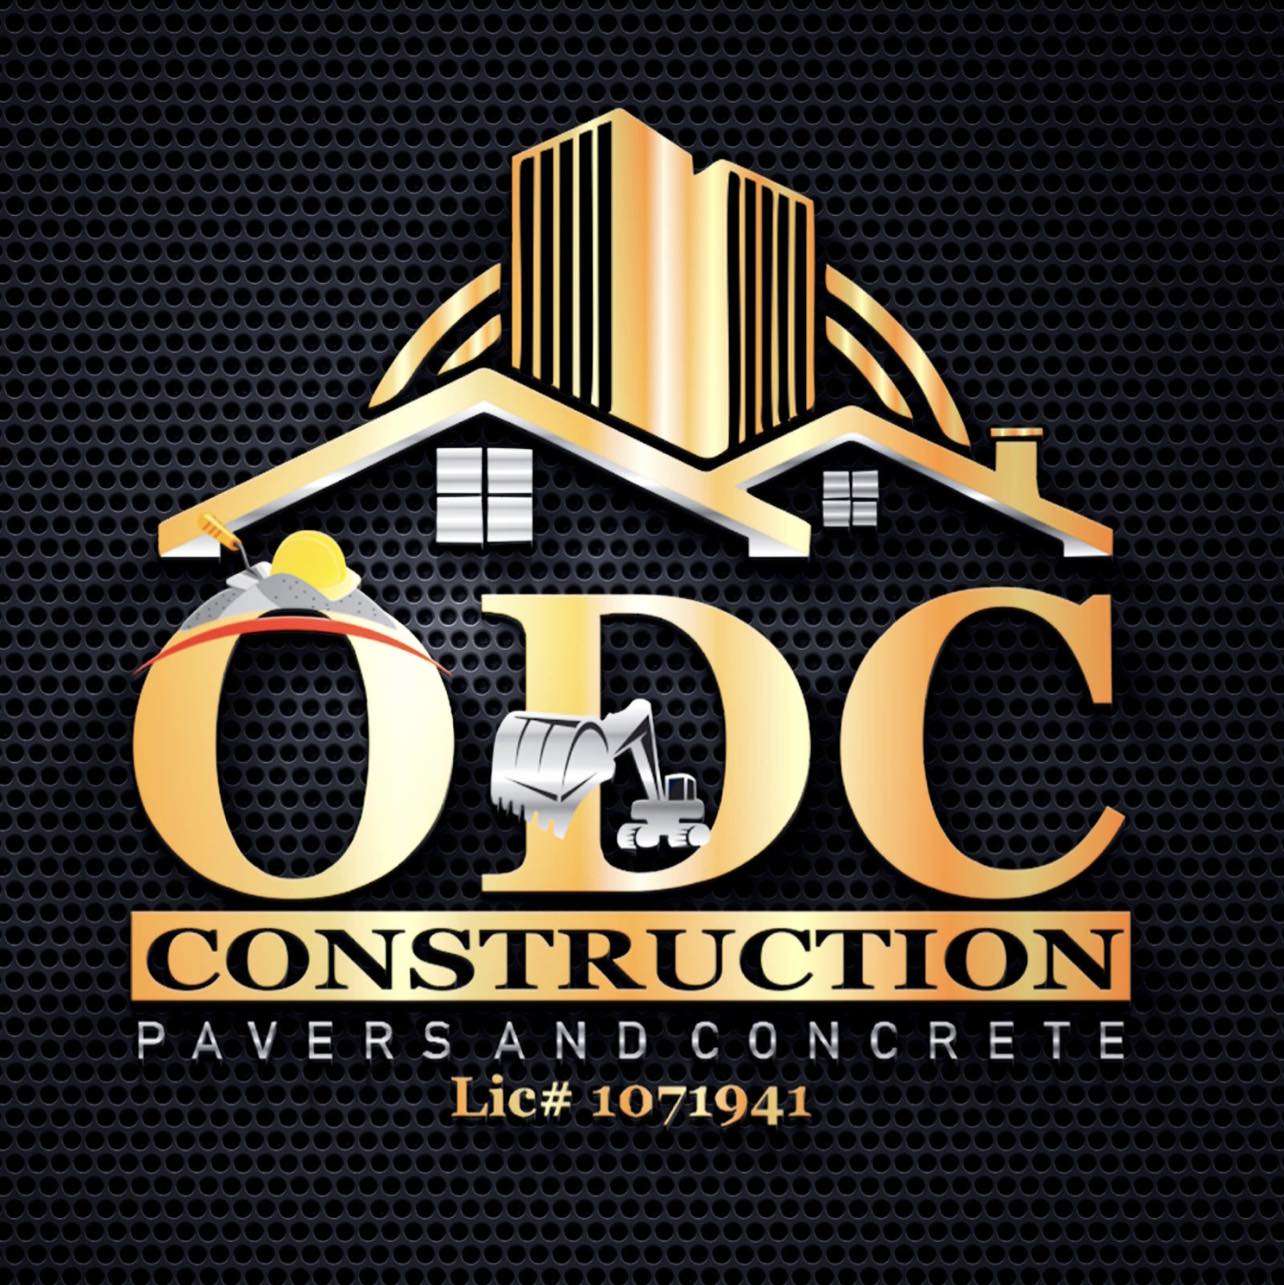 ODC Construction Logo